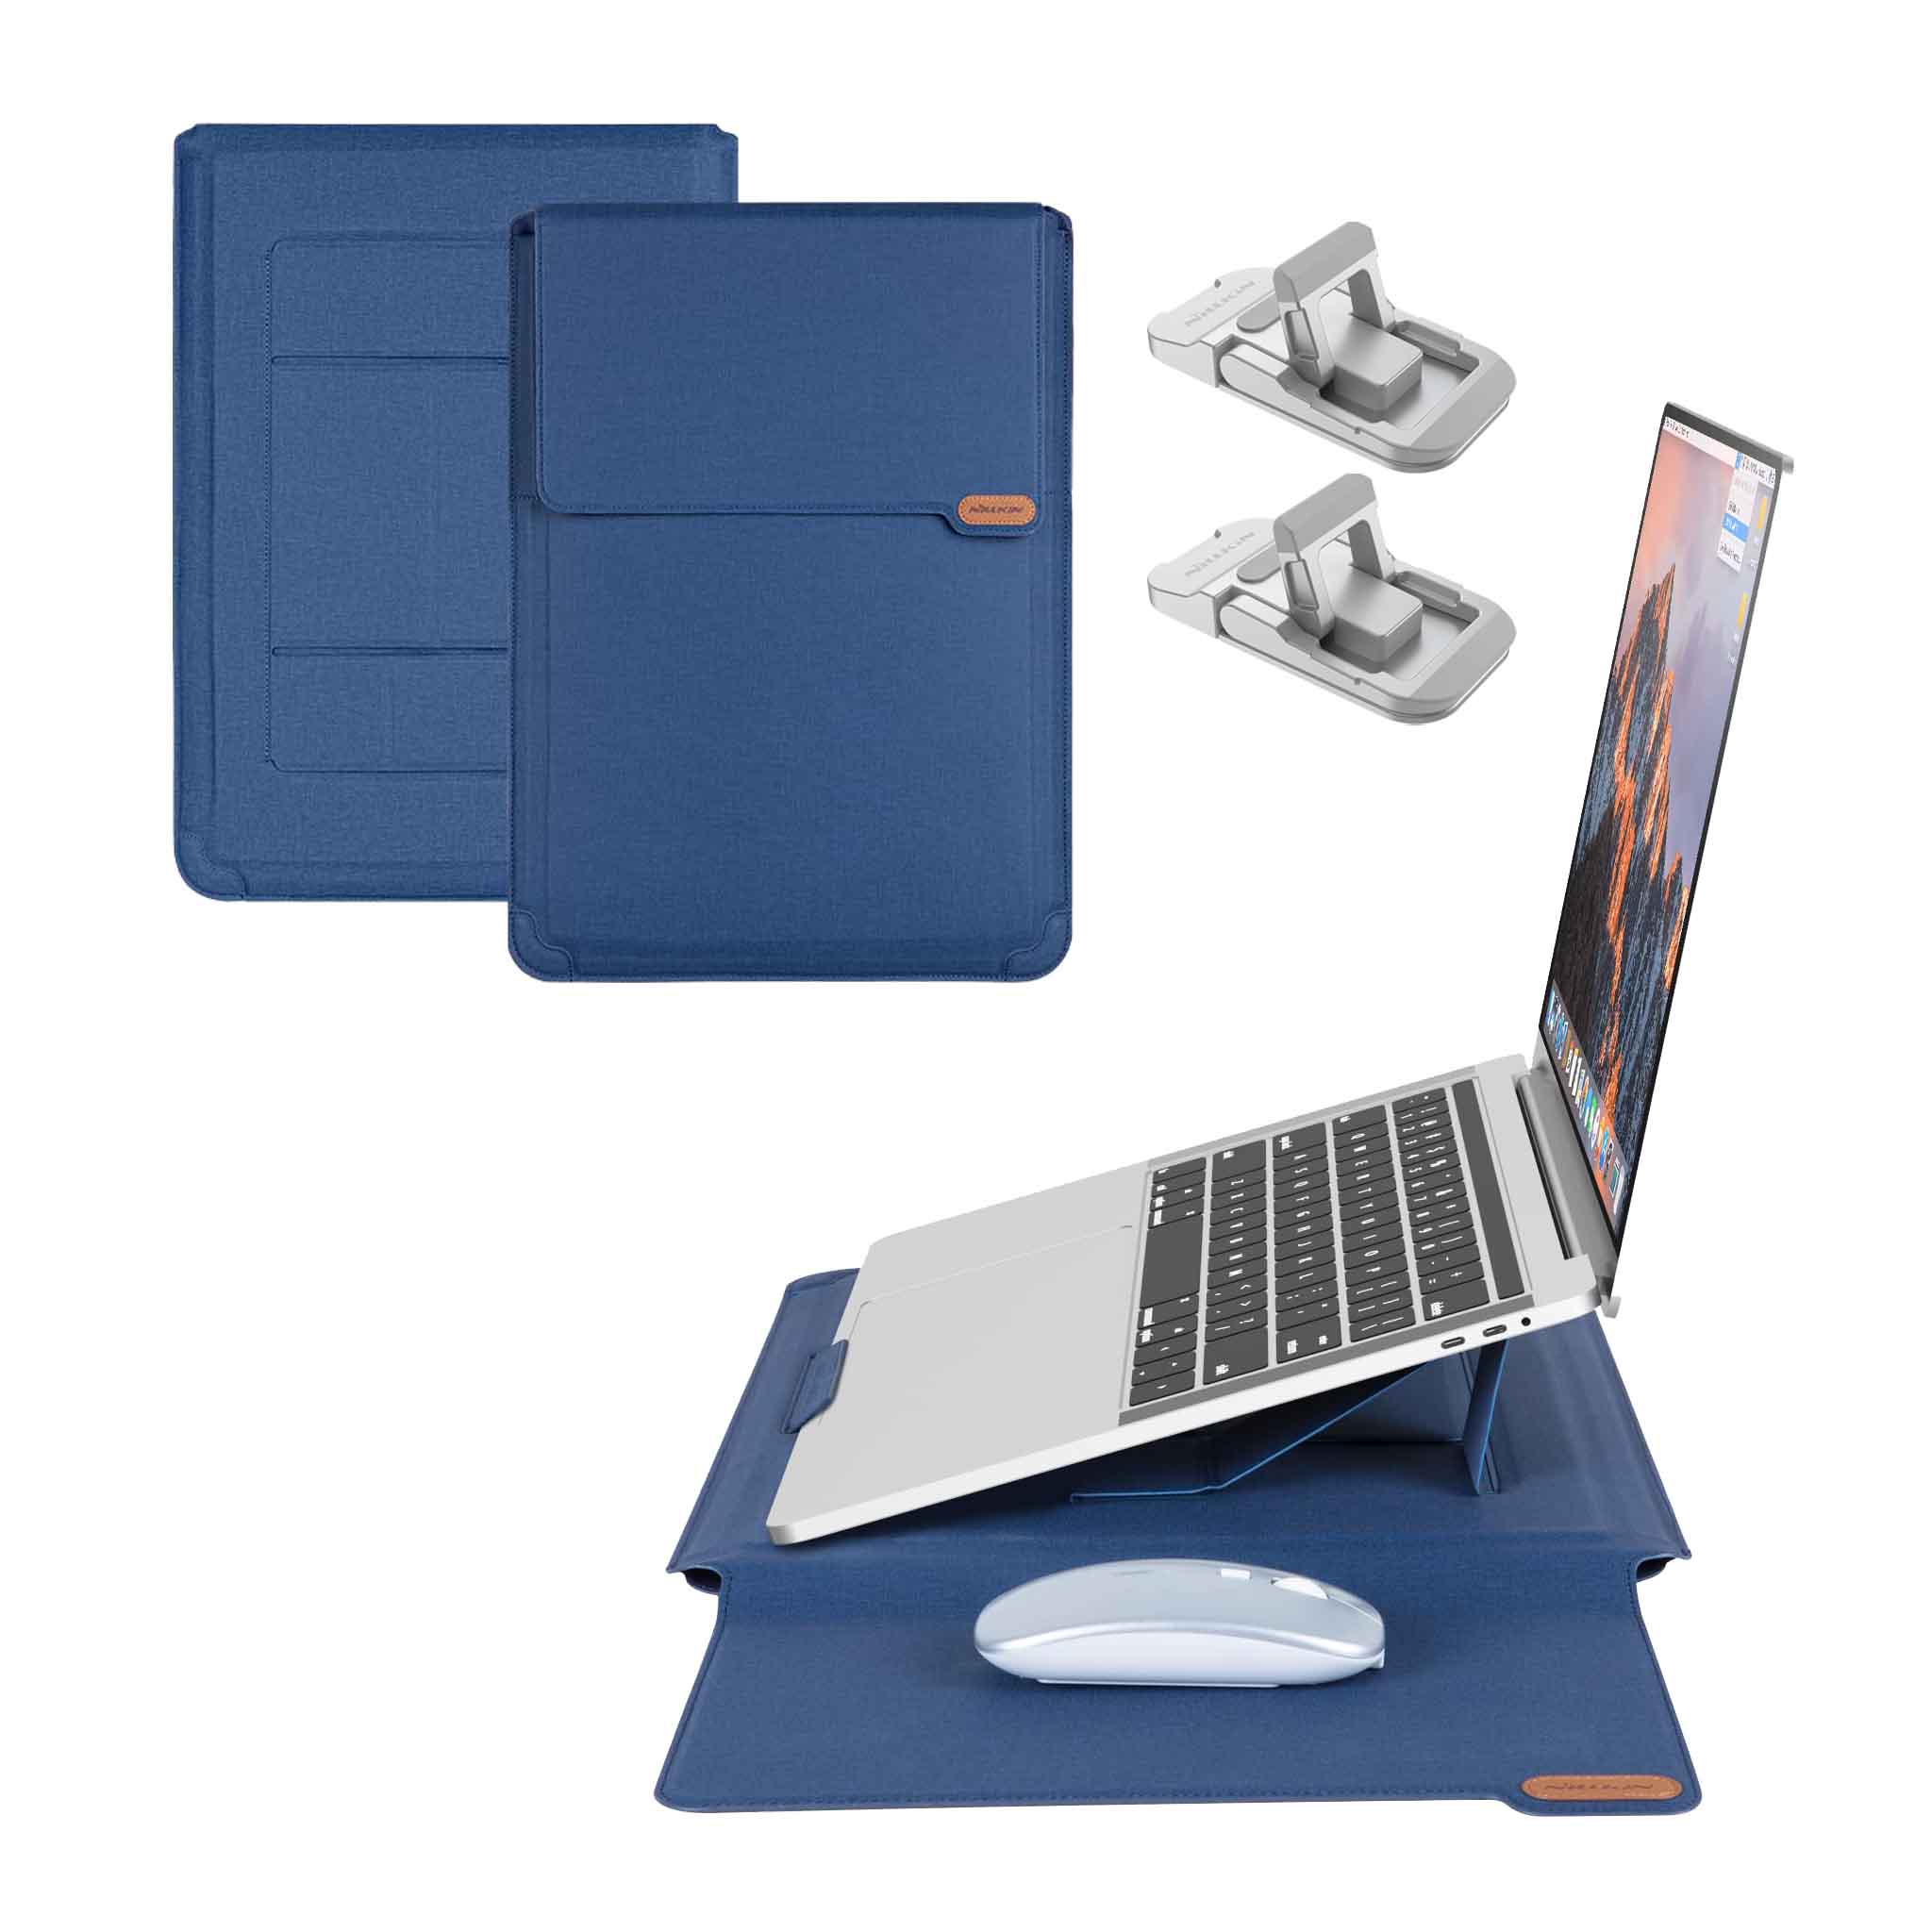 Fodero per laptop | Supporto portatile per laptop Bolster Plus